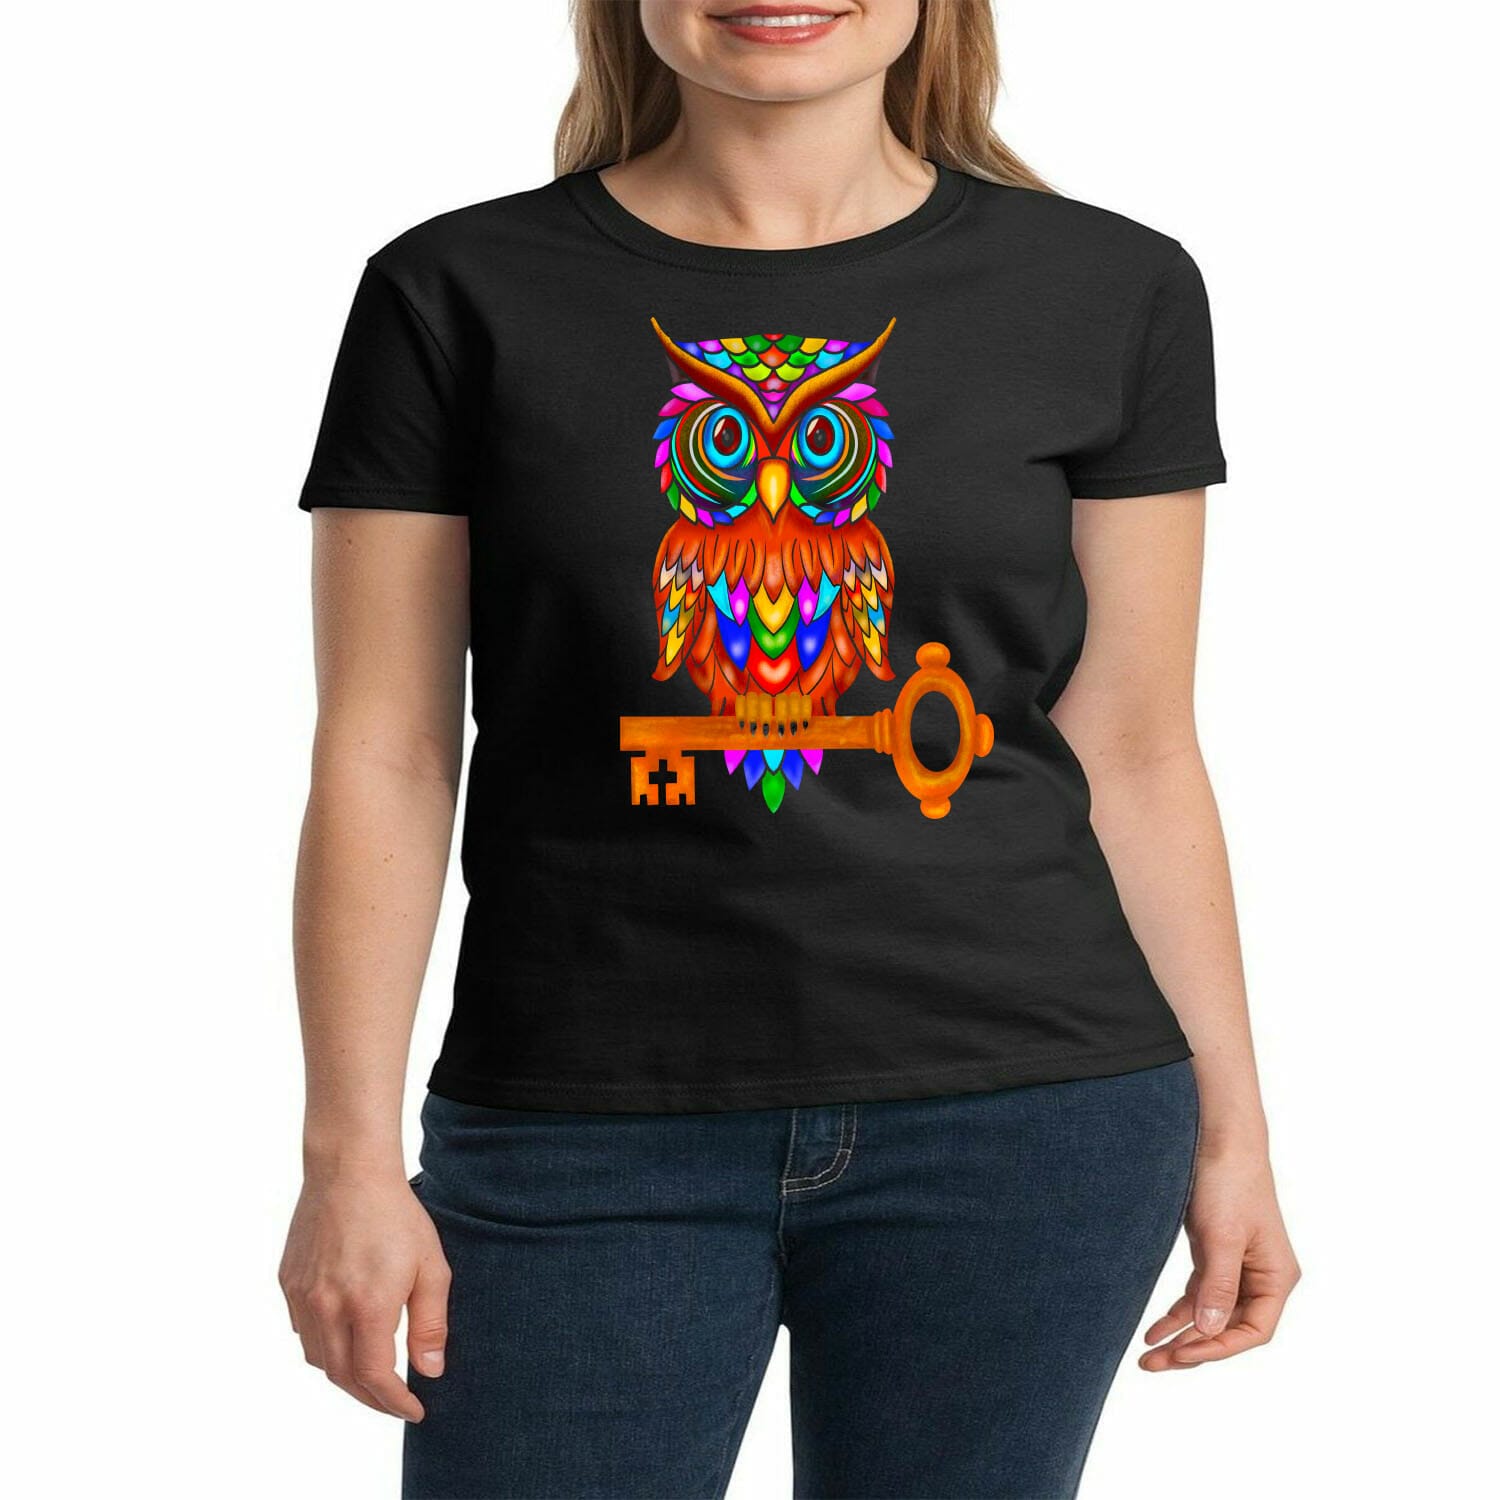 Owl sitting on a key t-shirt design